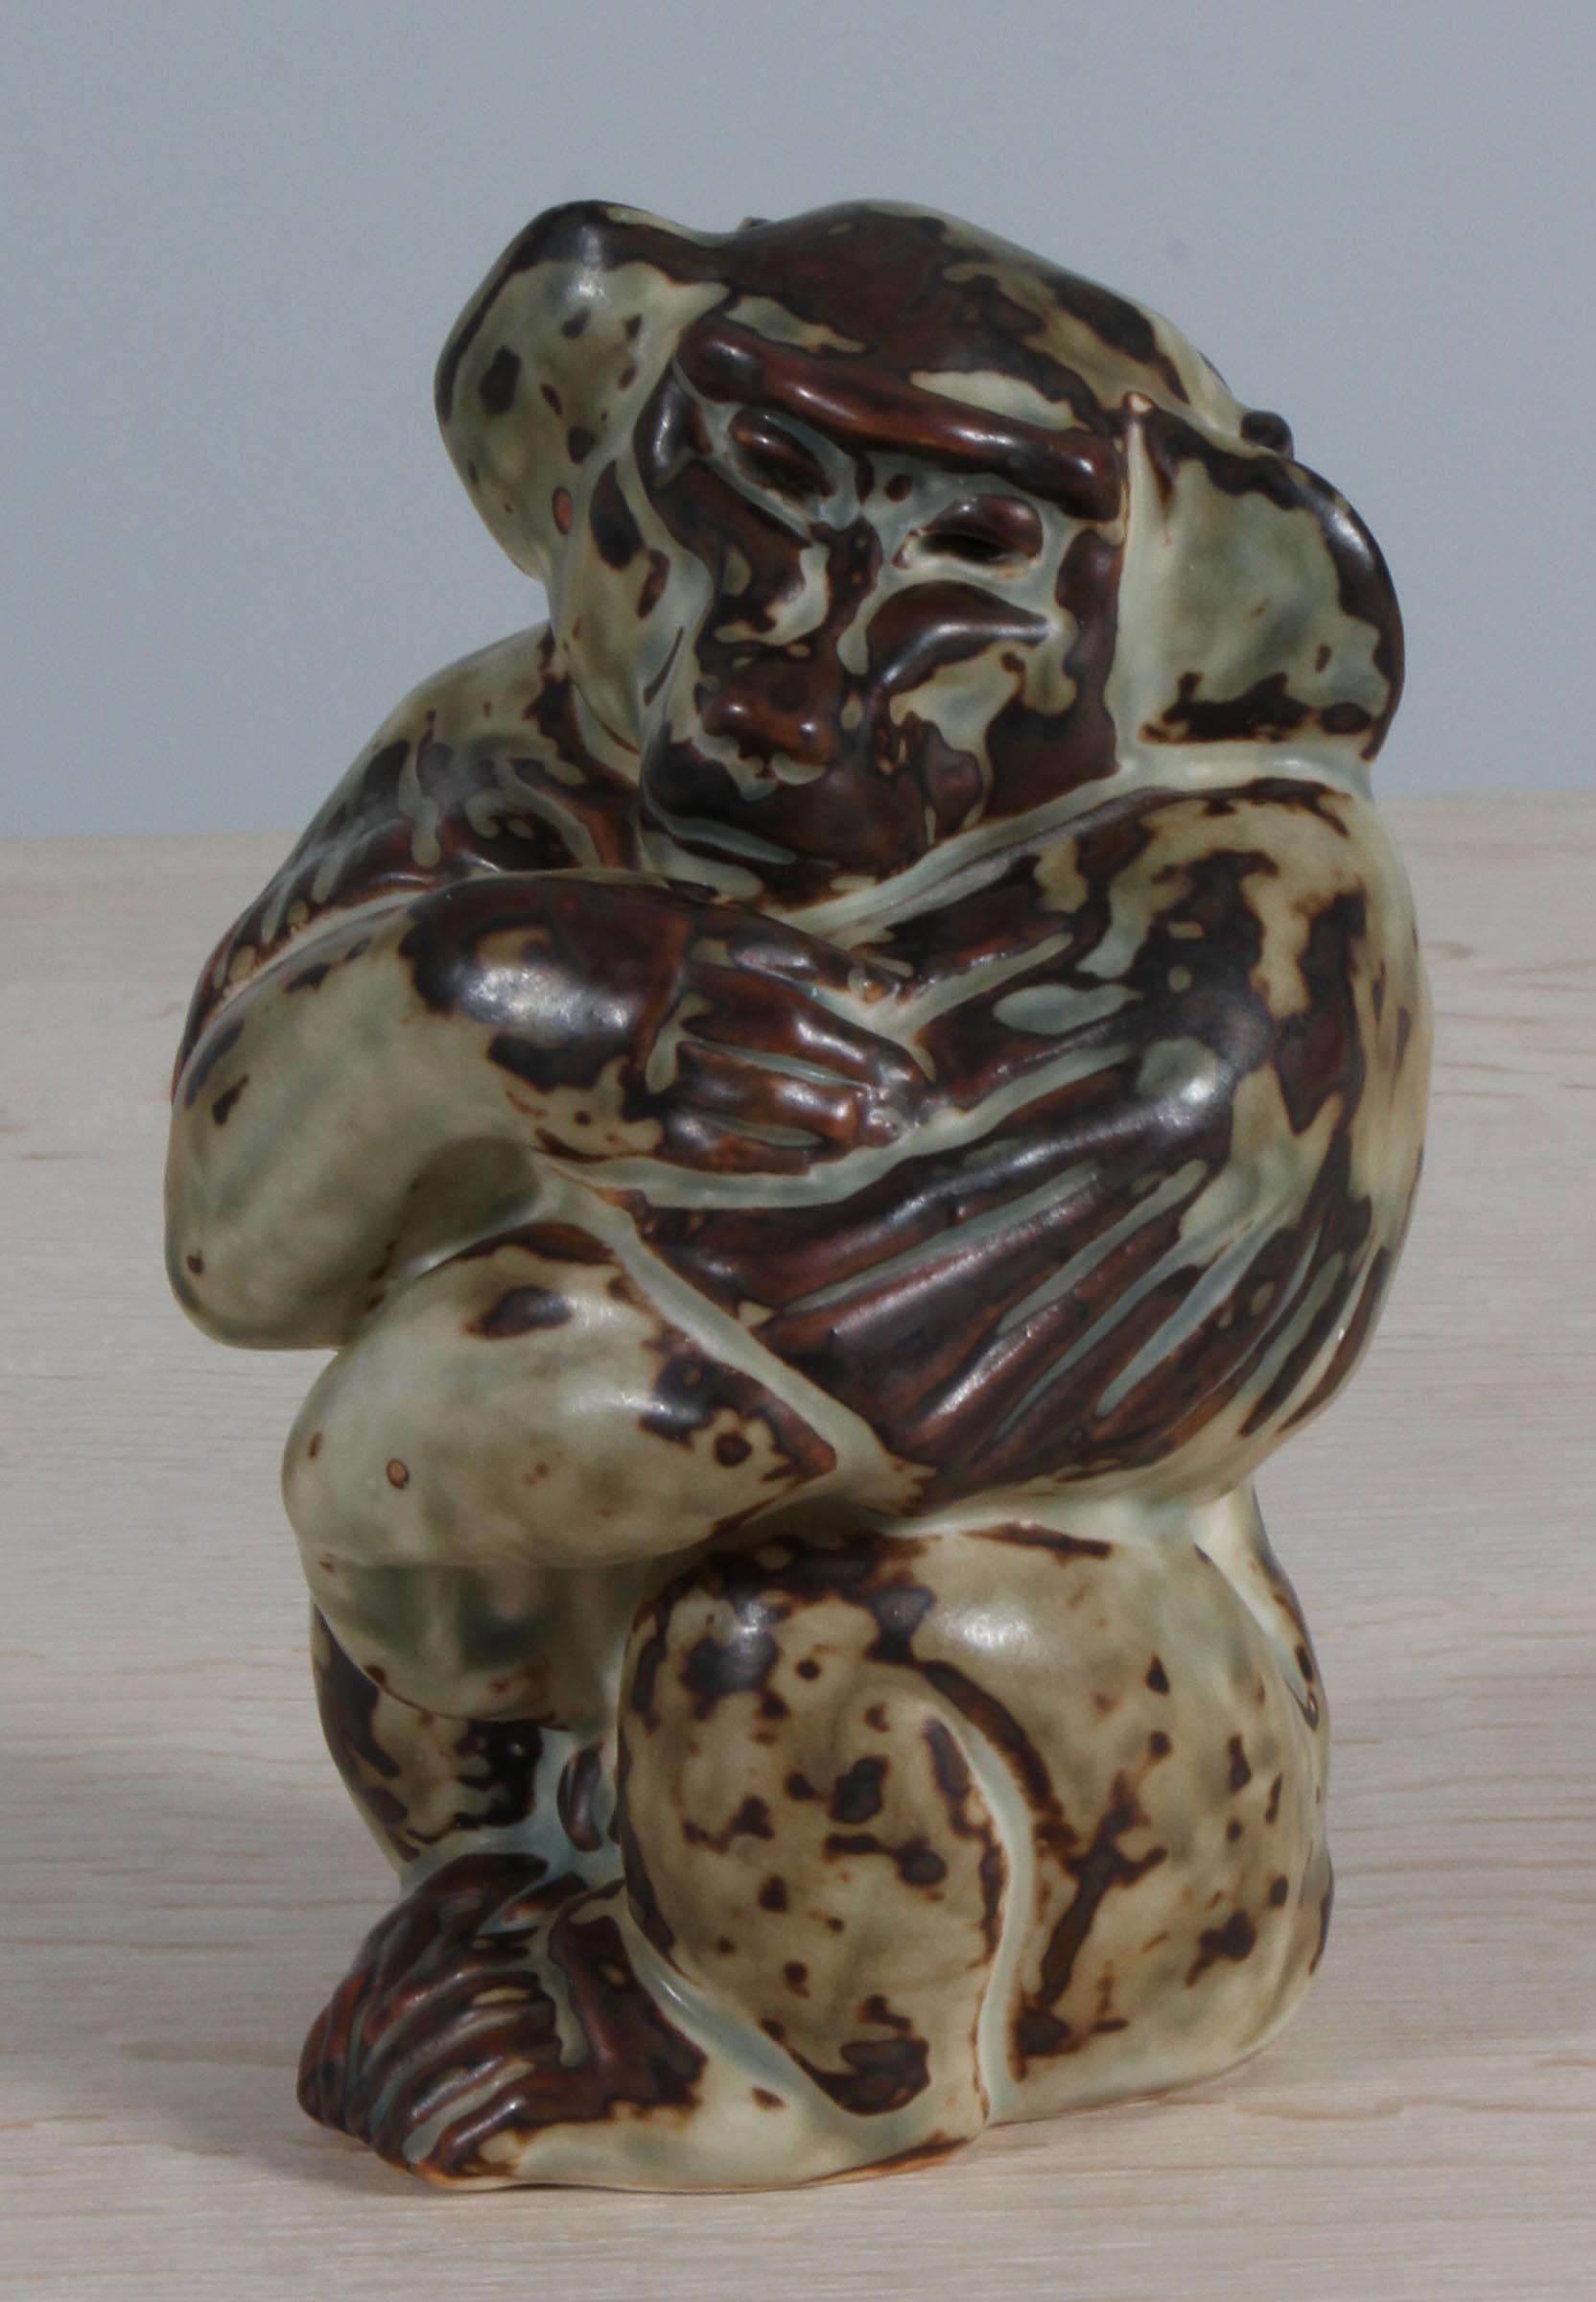 Scandinavian Modern Glazed Stoneware sitting Ape Figurine, Knud Kyhn for Royal Copenhagen #20216 For Sale